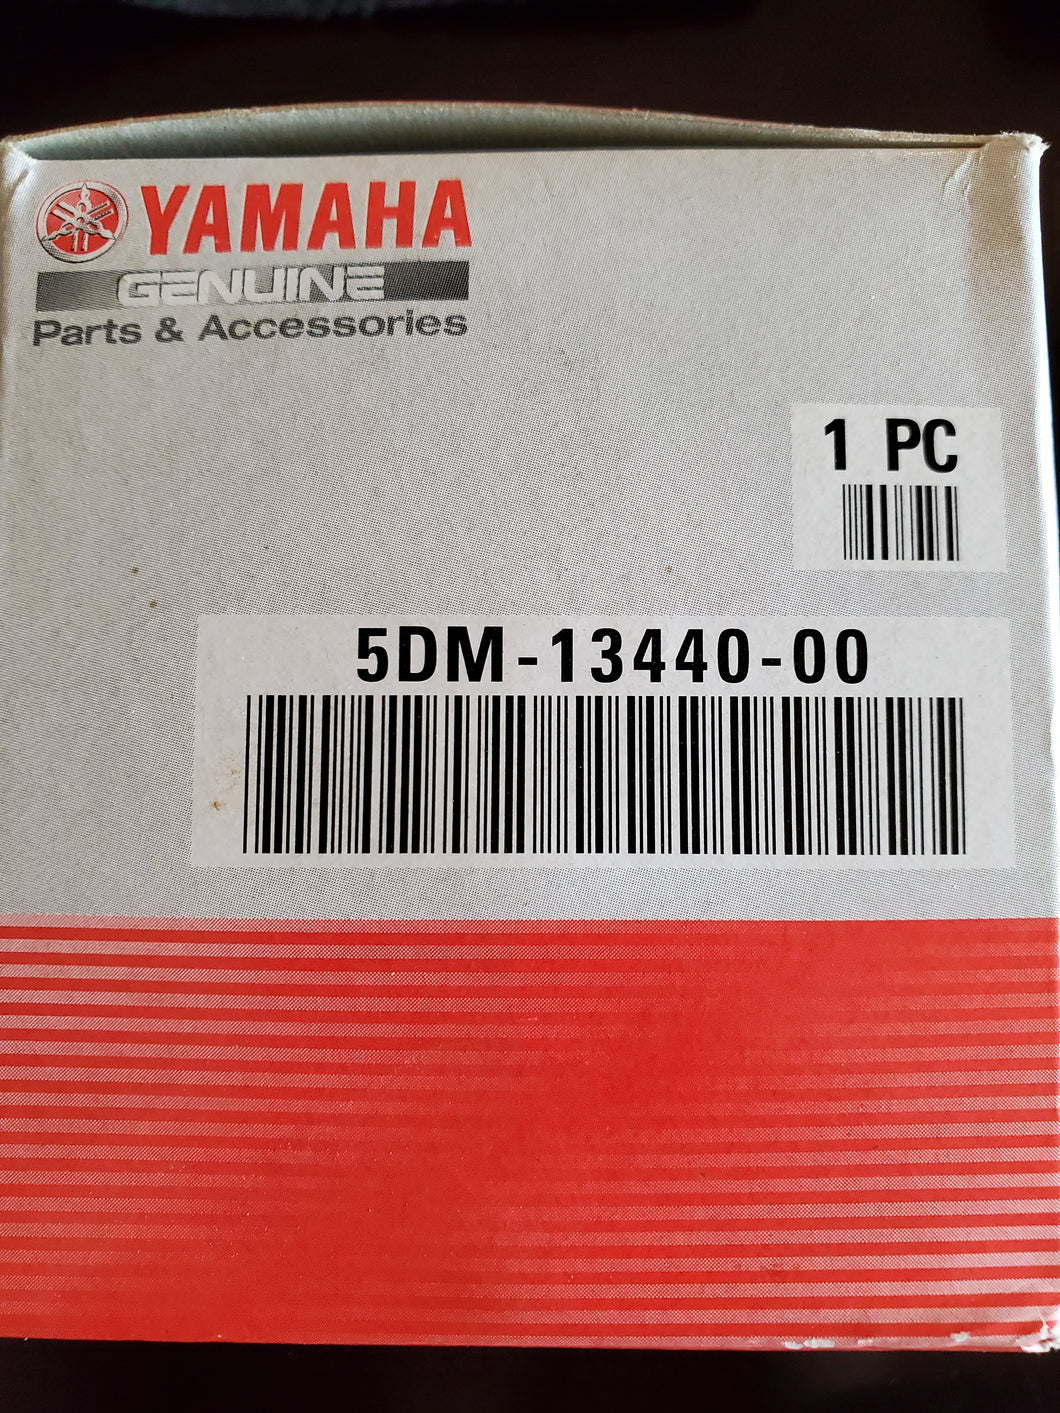 Yamaha oil filter 5DM-13440-00